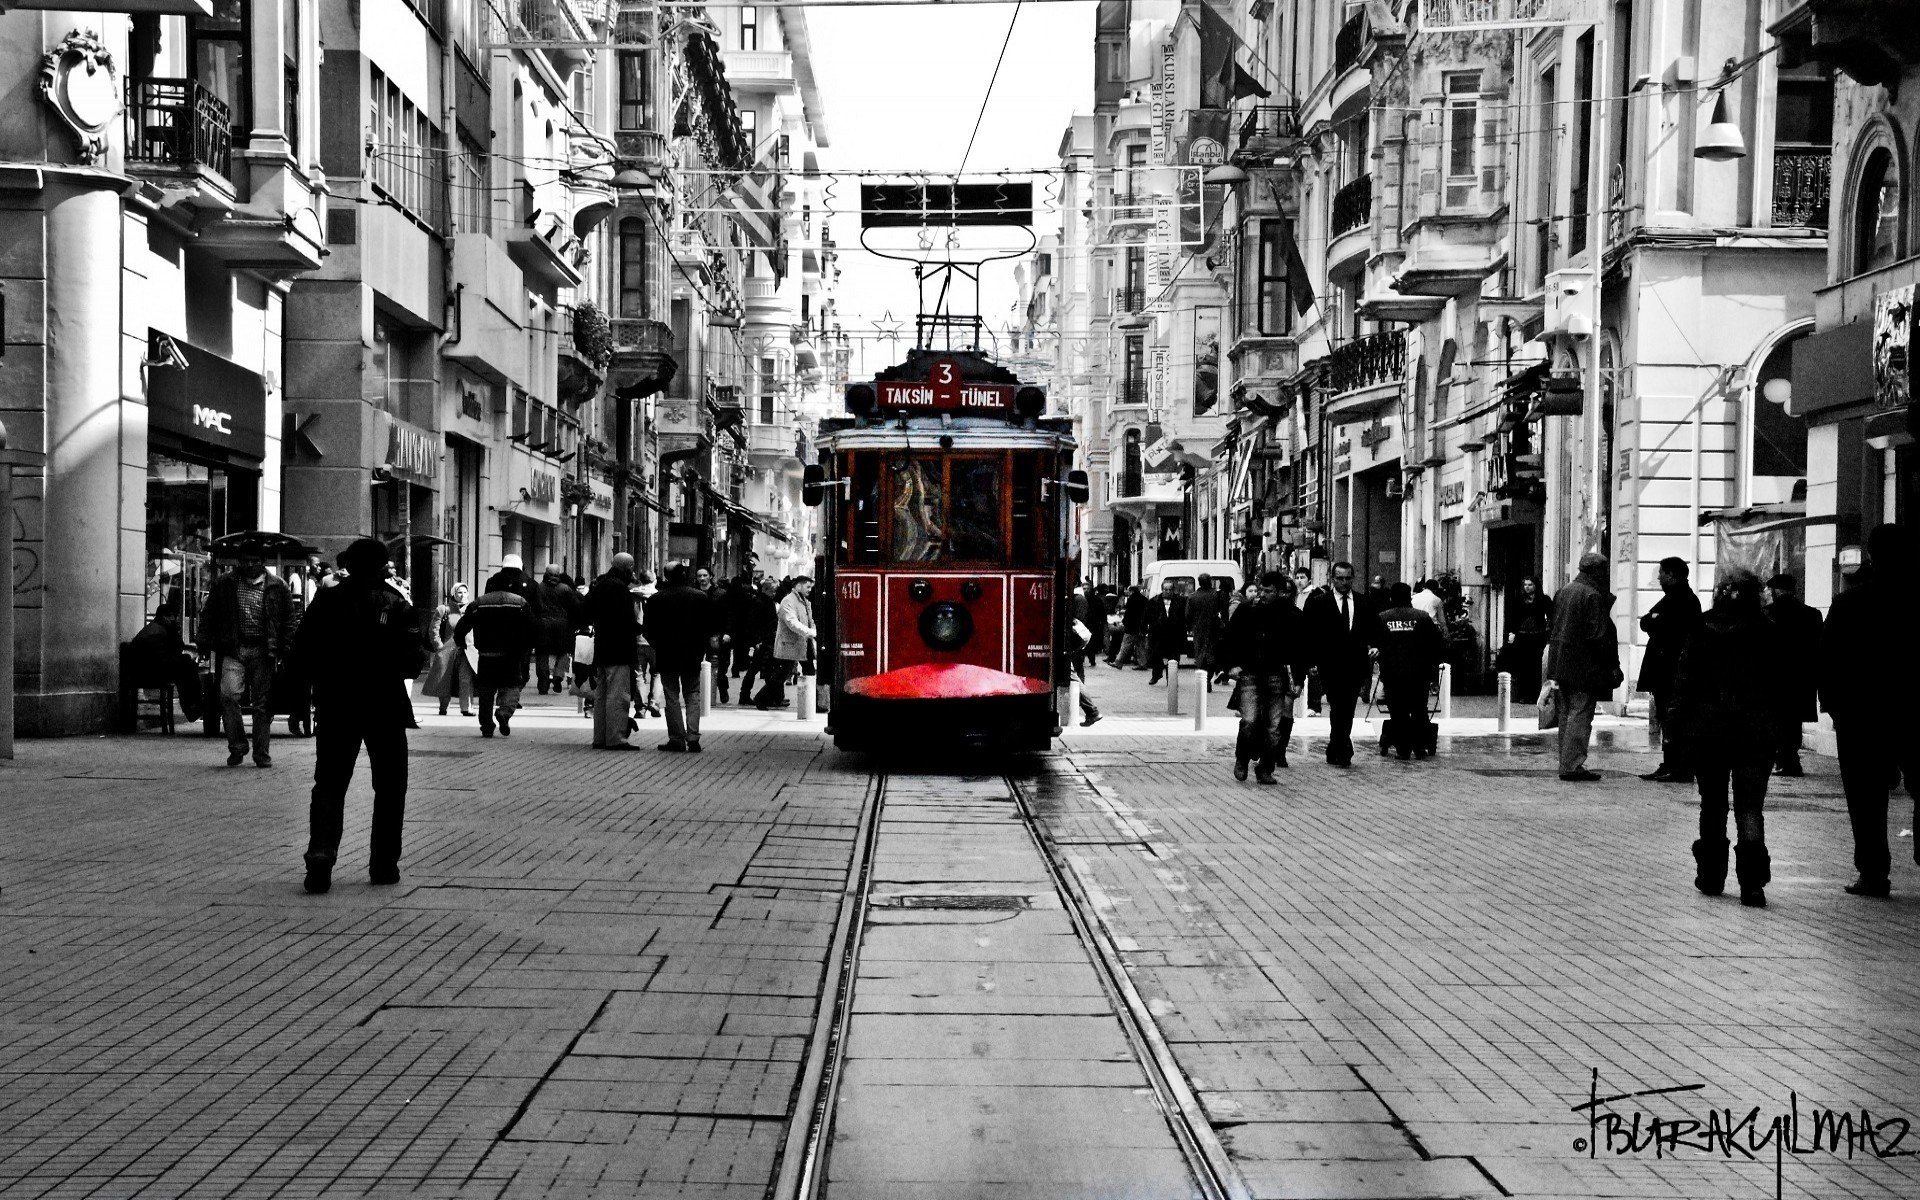 Download Wallpaper turkey istanbul people tram taksim, 1920x The city's tram in Taksim Square (Istanbul)